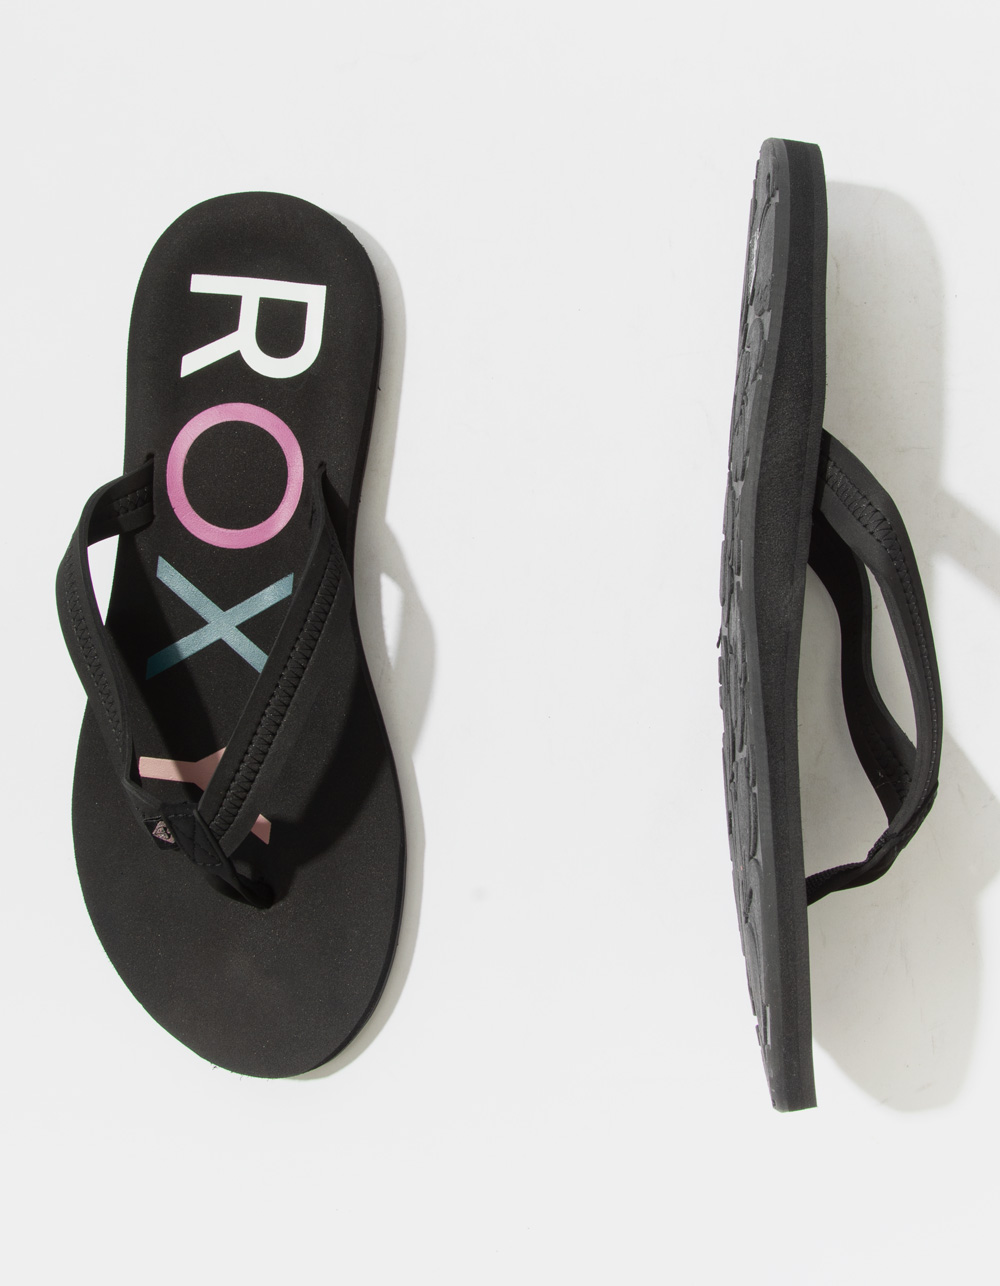 ROXY Vista III Womens Sandals